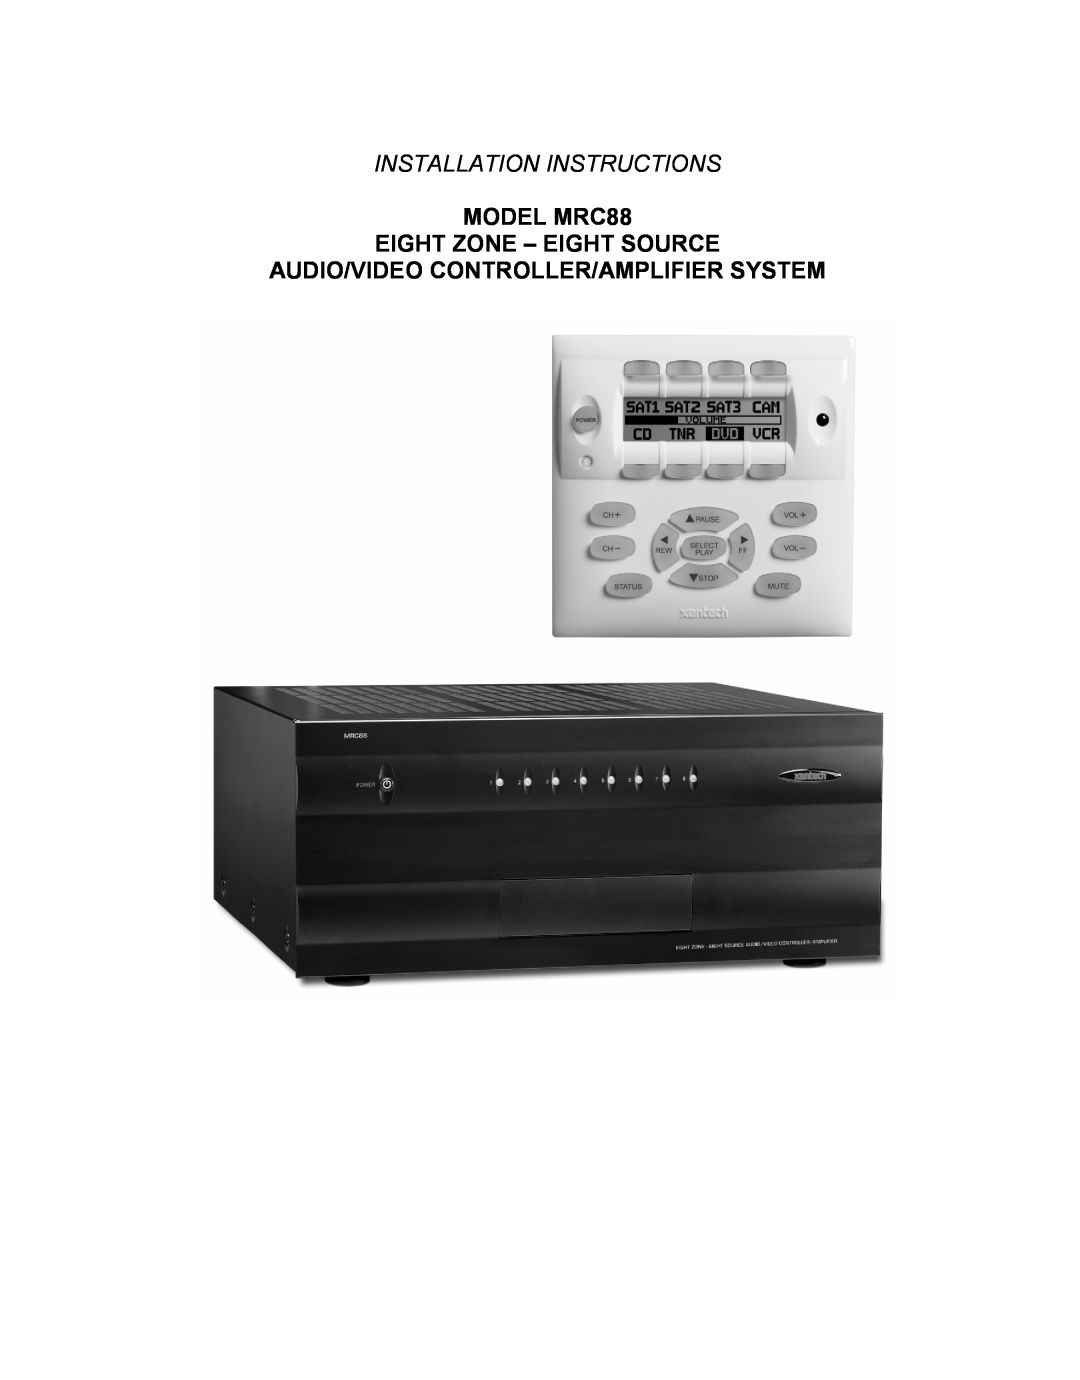 Xantech mrc88 installation instructions MODEL MRC88 EIGHT ZONE - EIGHT SOURCE, Audio/Video Controller/Amplifier System 